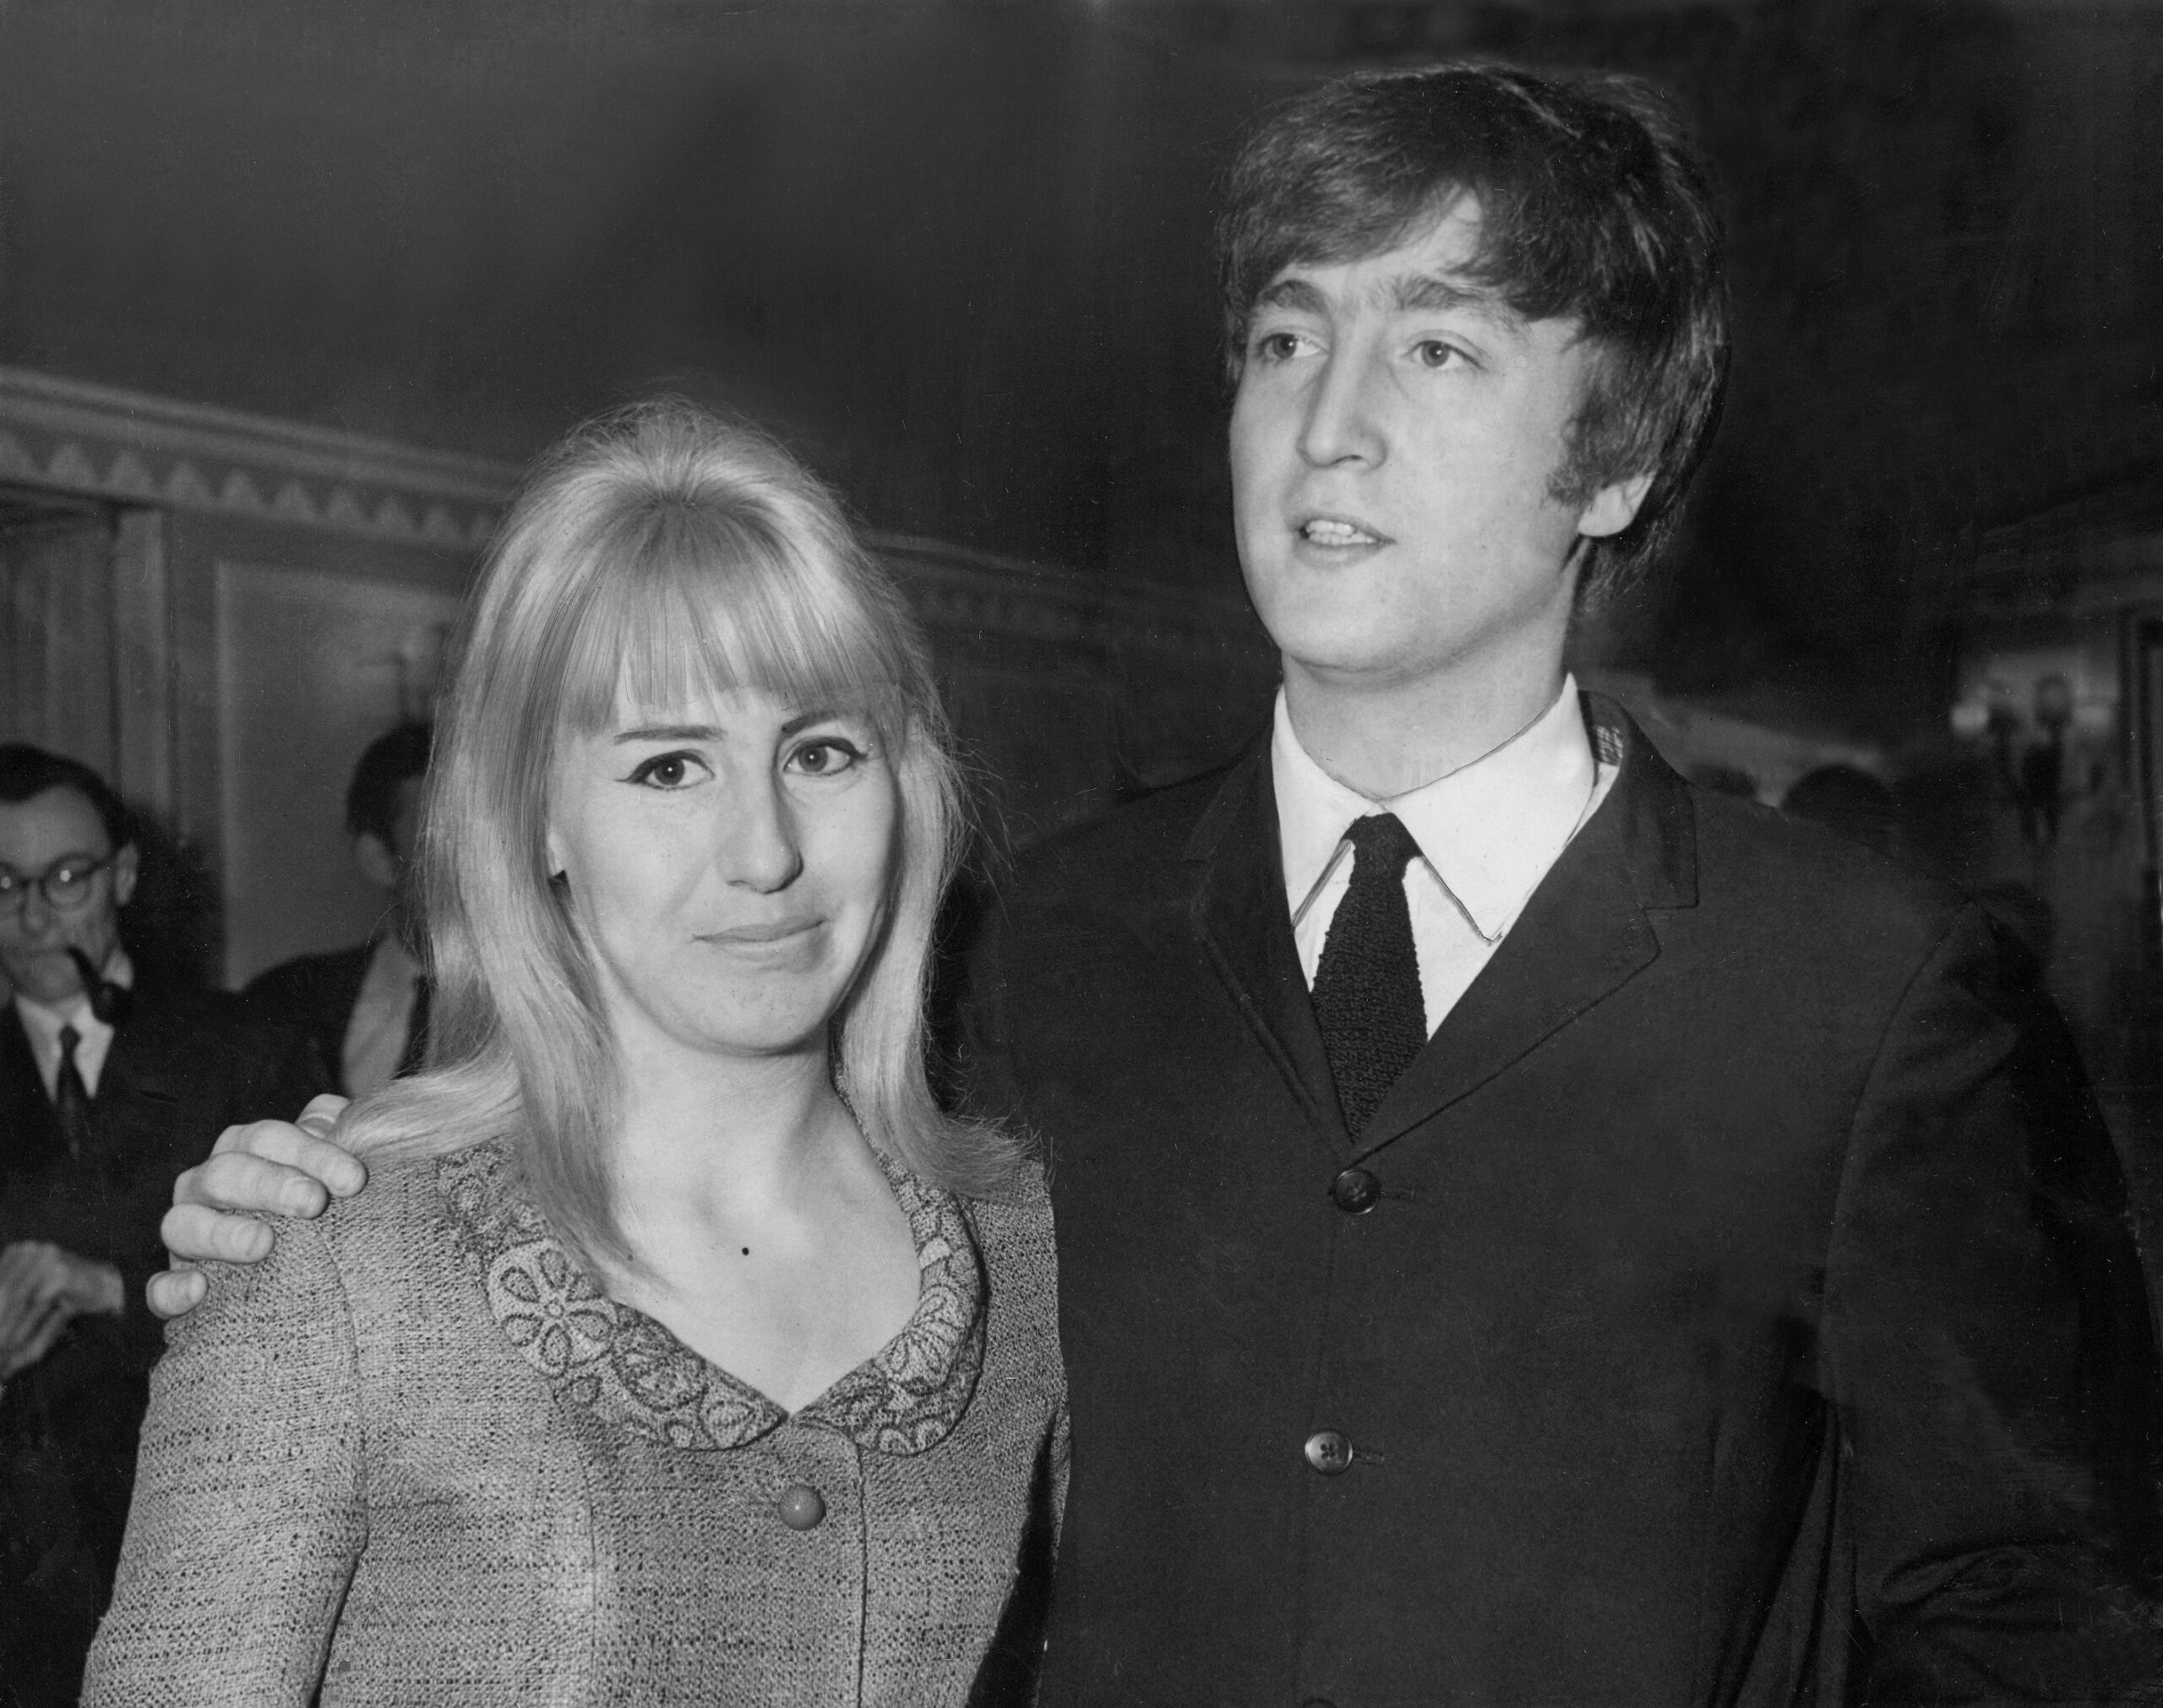 Cynthia Lennon and John Lennon